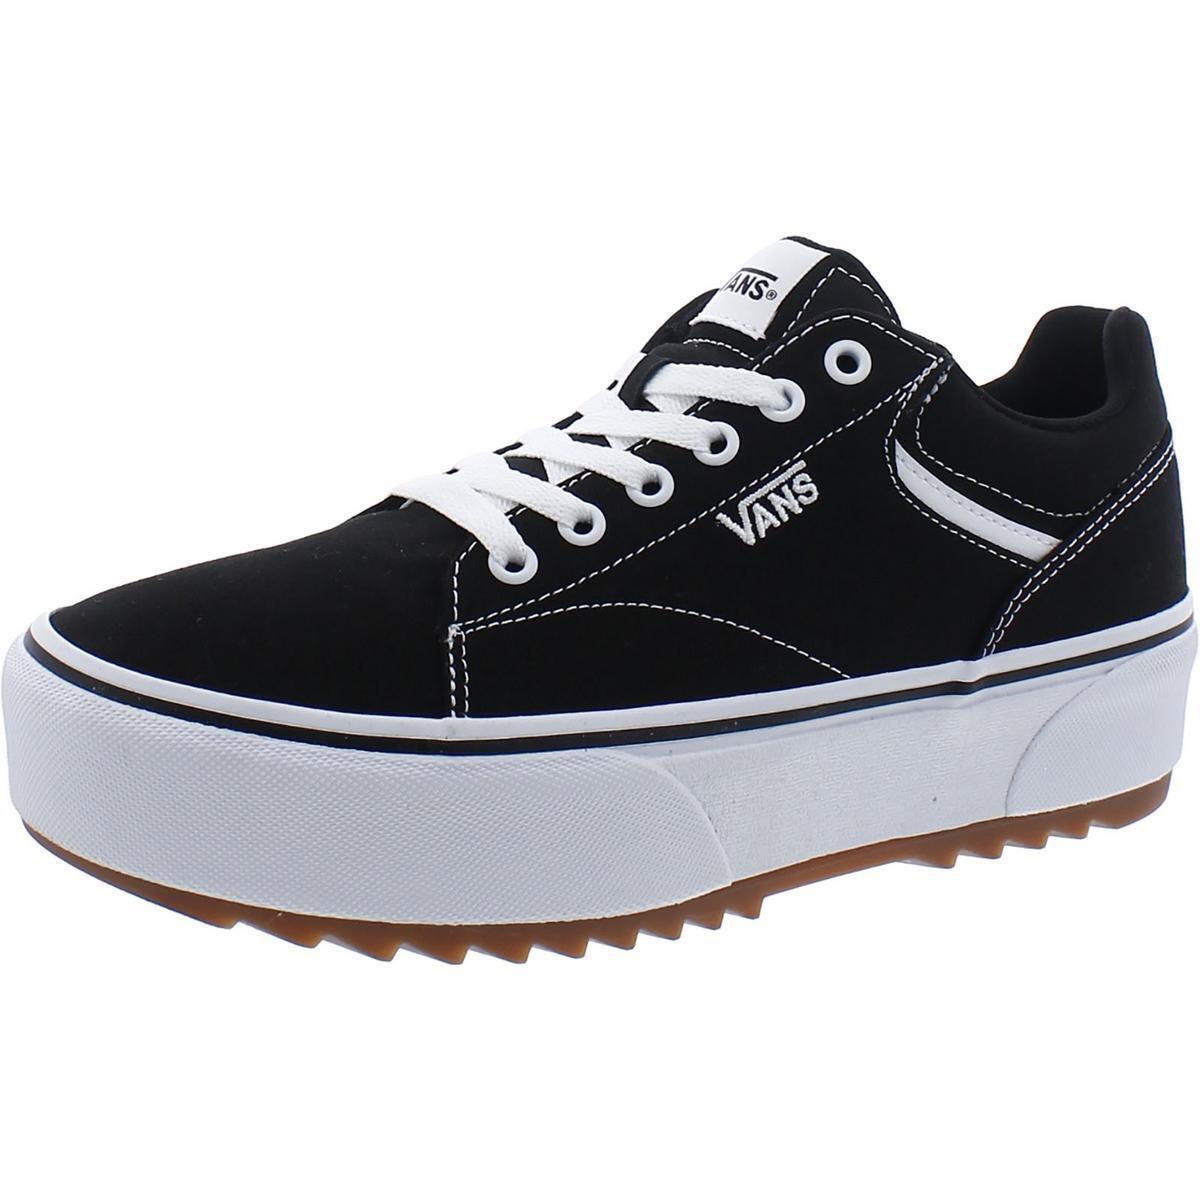 Vans Womens Black Casual and Fashion Sneakers Shoes 9.5 Medium B M Bhfo 8273